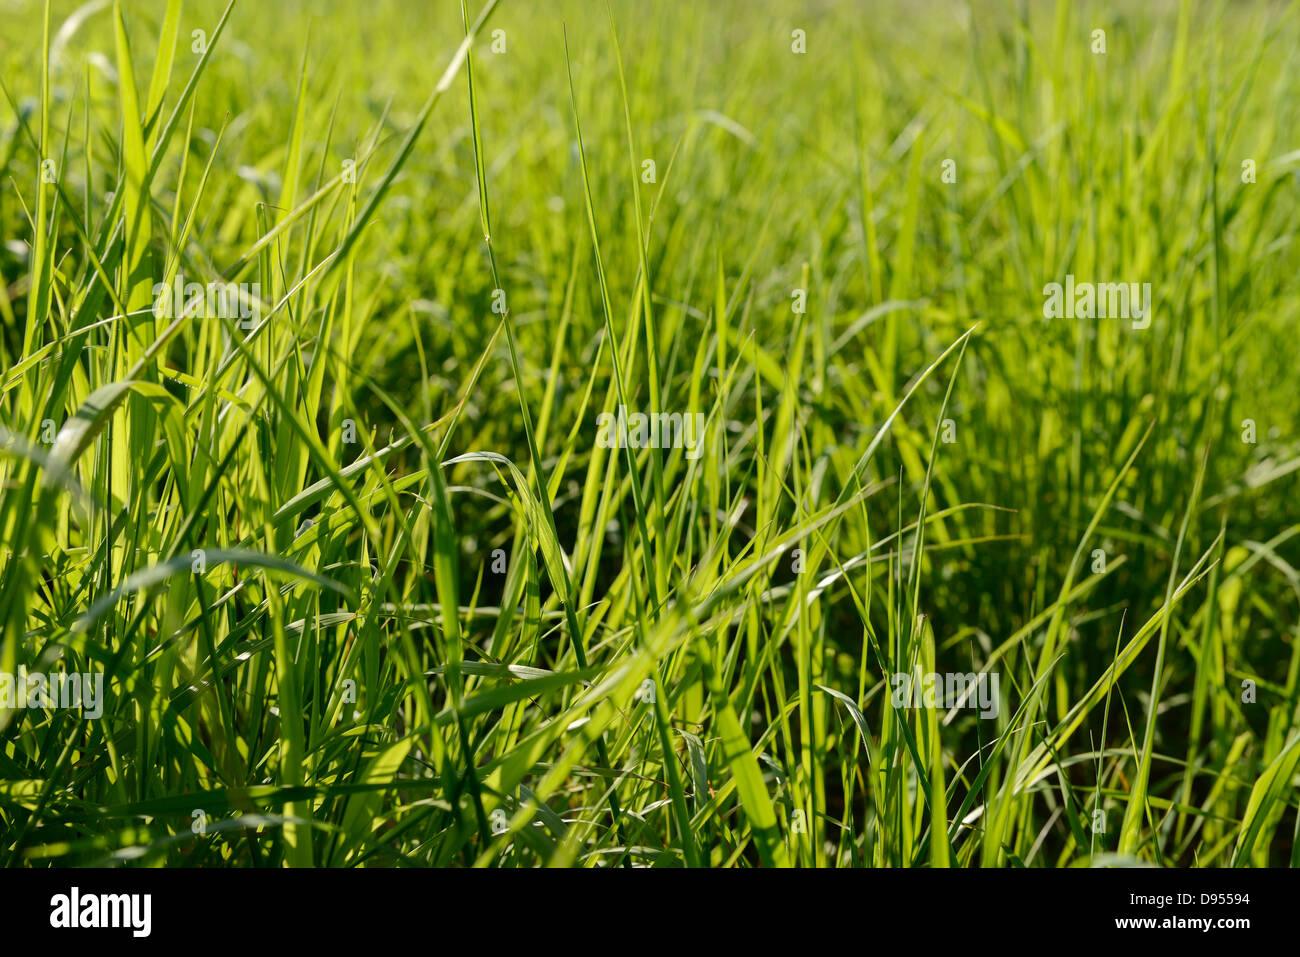 Field of long overgrown grass Stock Photo